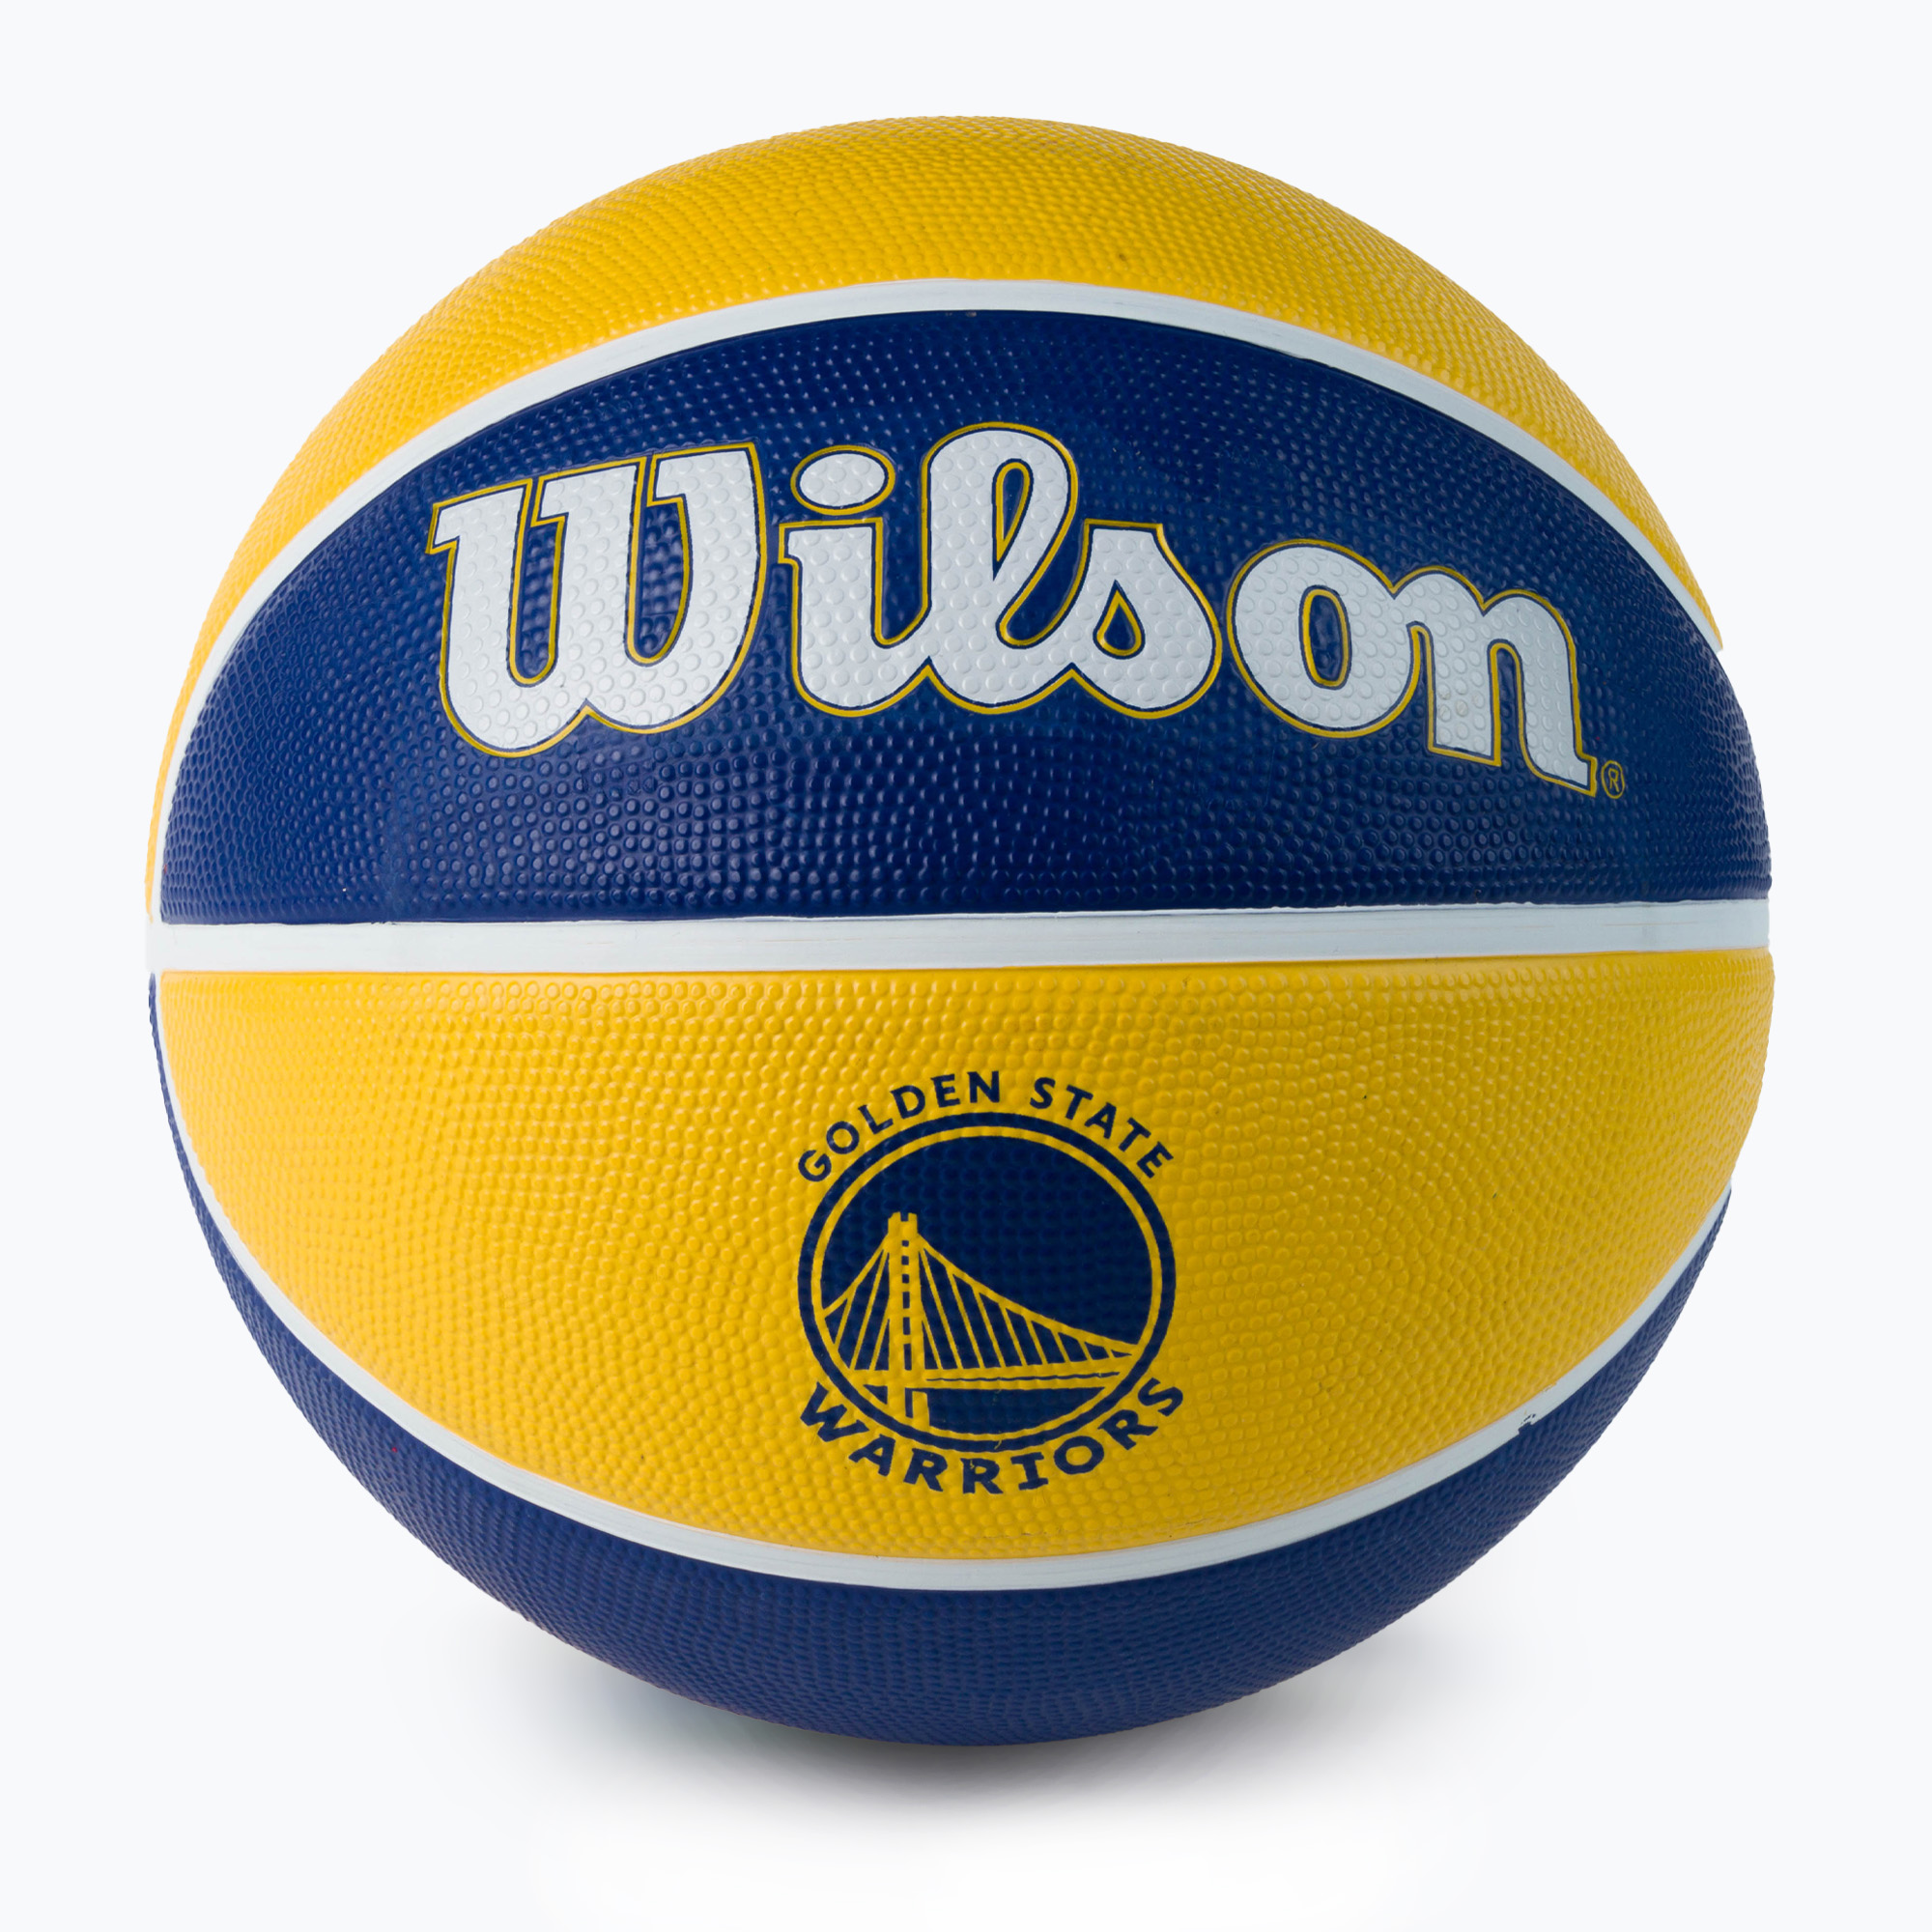 Wilson NBA Team Tribute Golden State Warriors basketbal modrý WTB1300XBGOL veľkosť 7